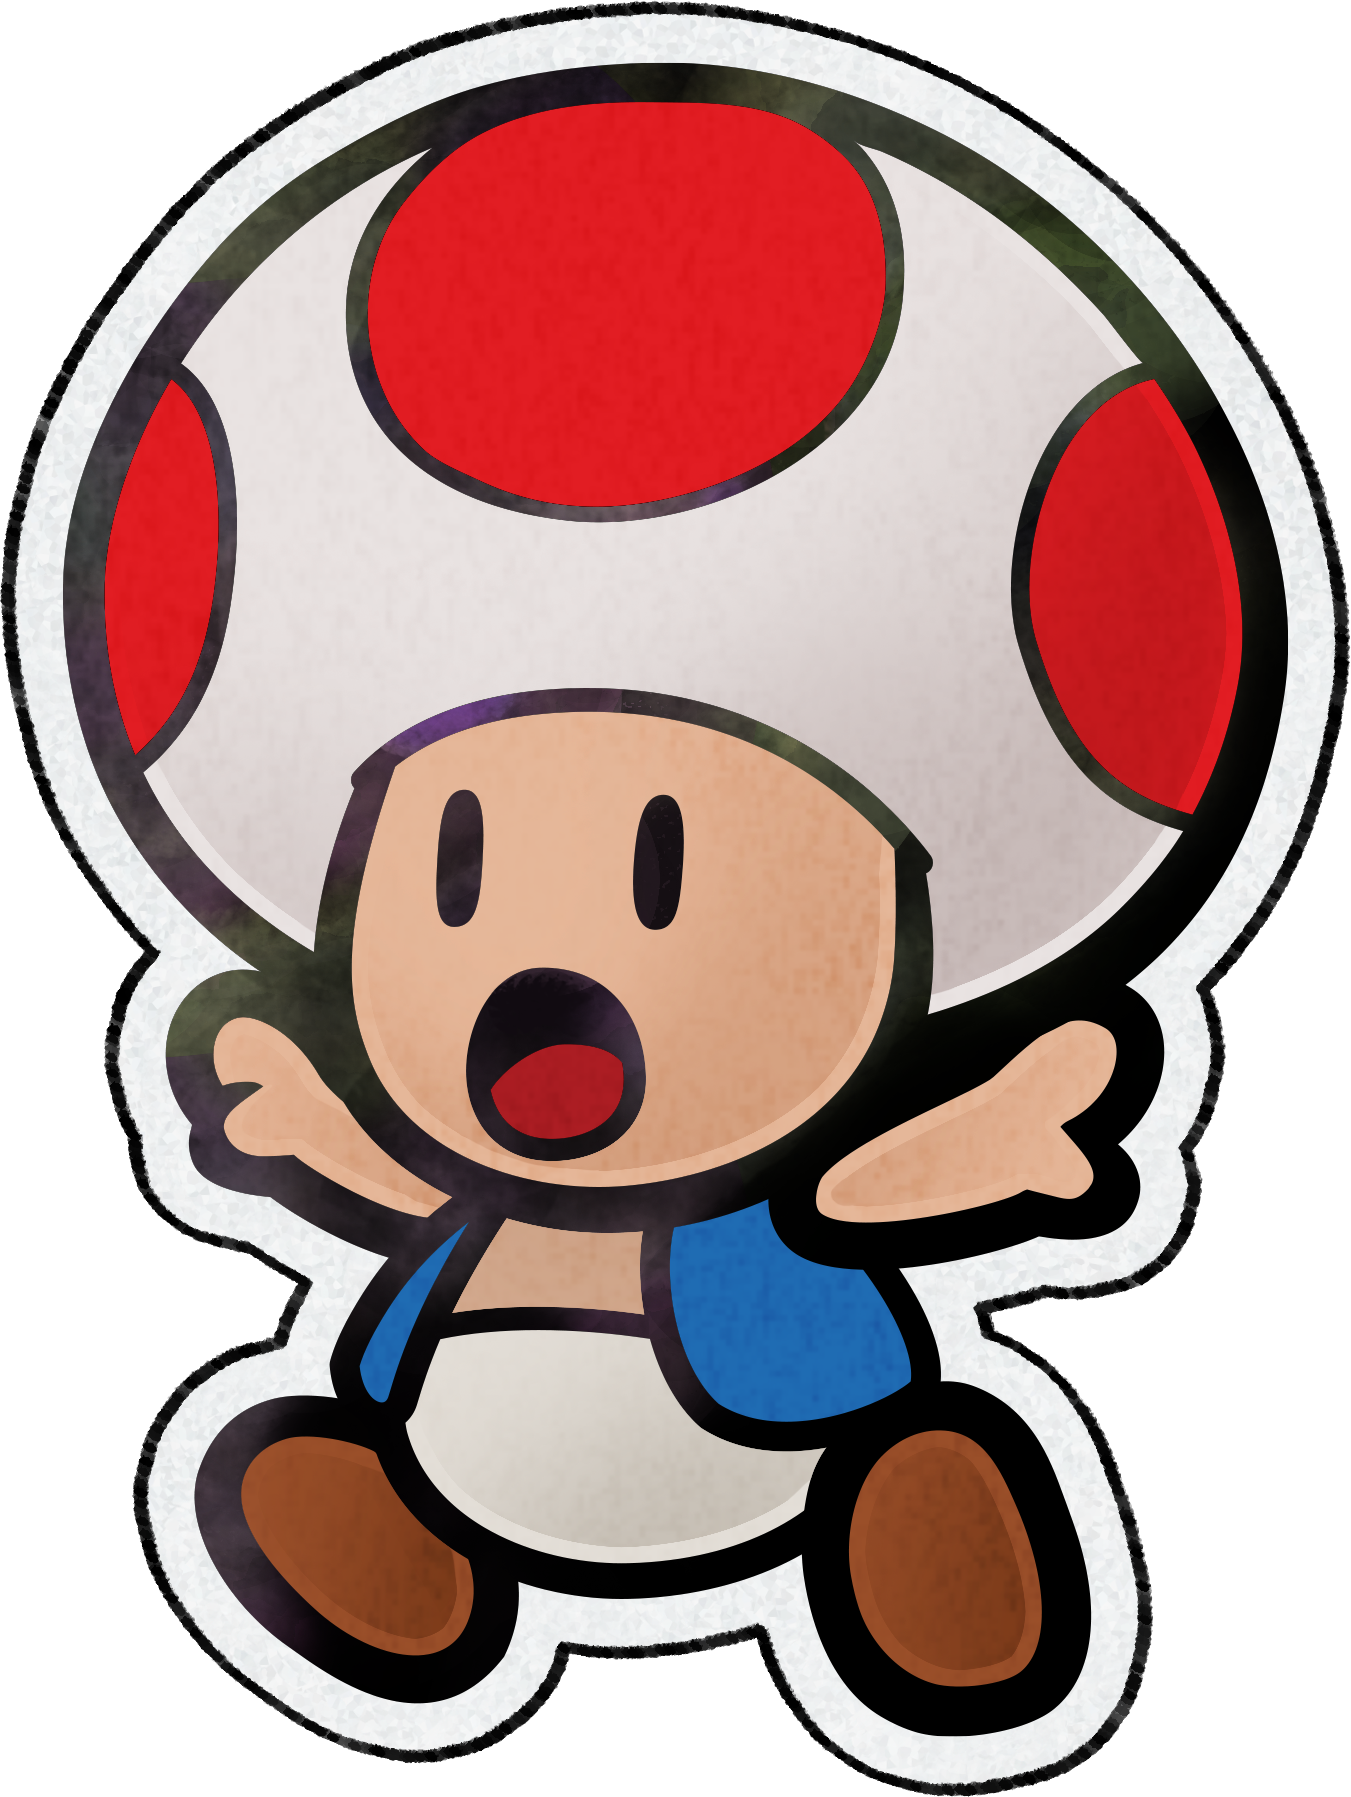 Filemlpj Artwork Toad Altpng Super Mario Wiki The Mario Encyclopedia 6665